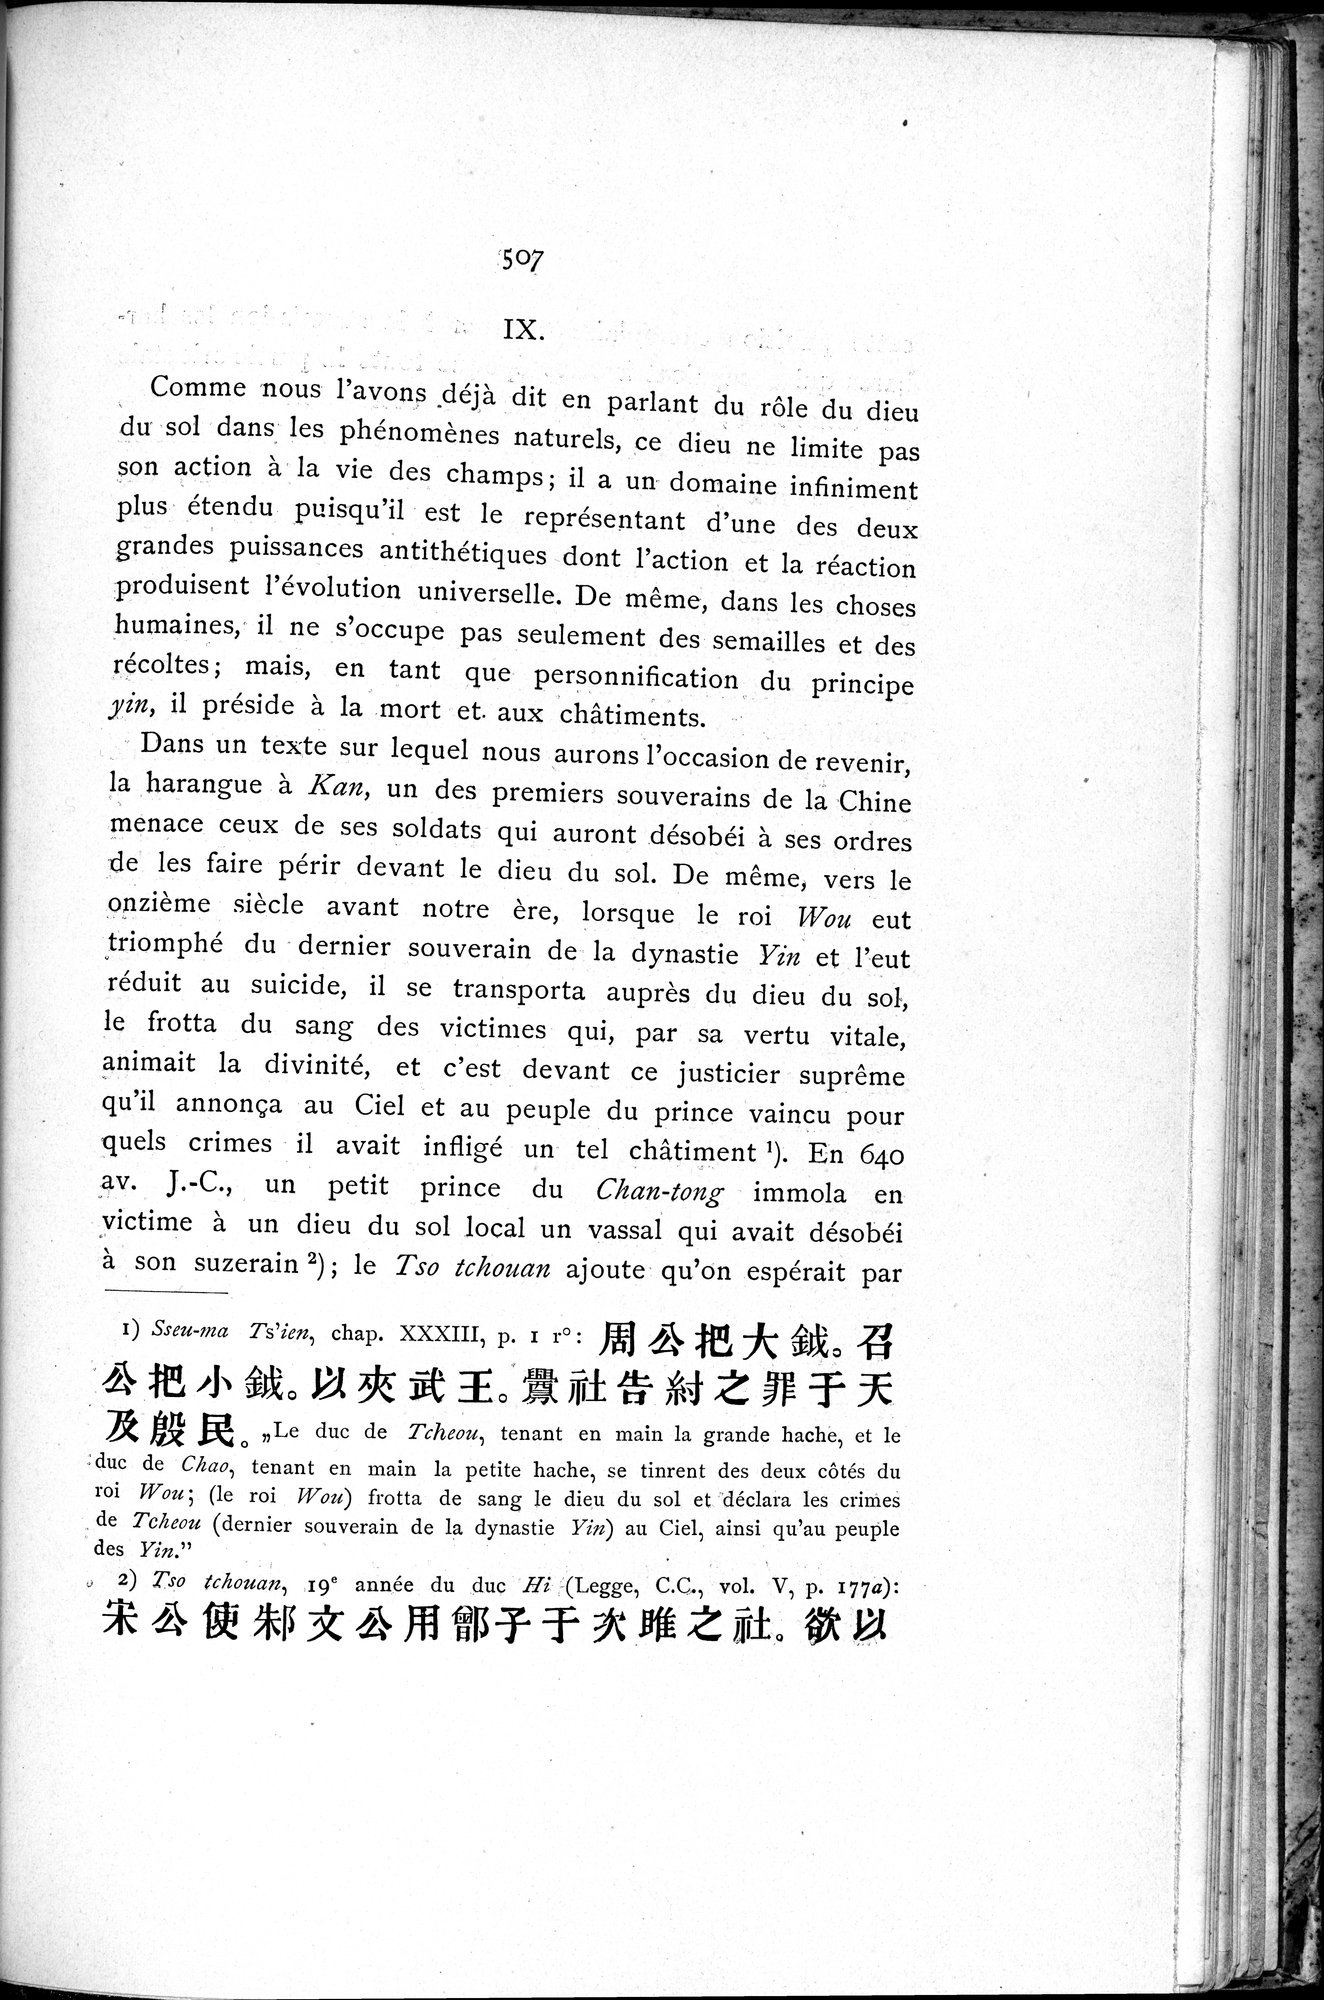 Le T'ai Chan : vol.1 / 543 ページ（白黒高解像度画像）